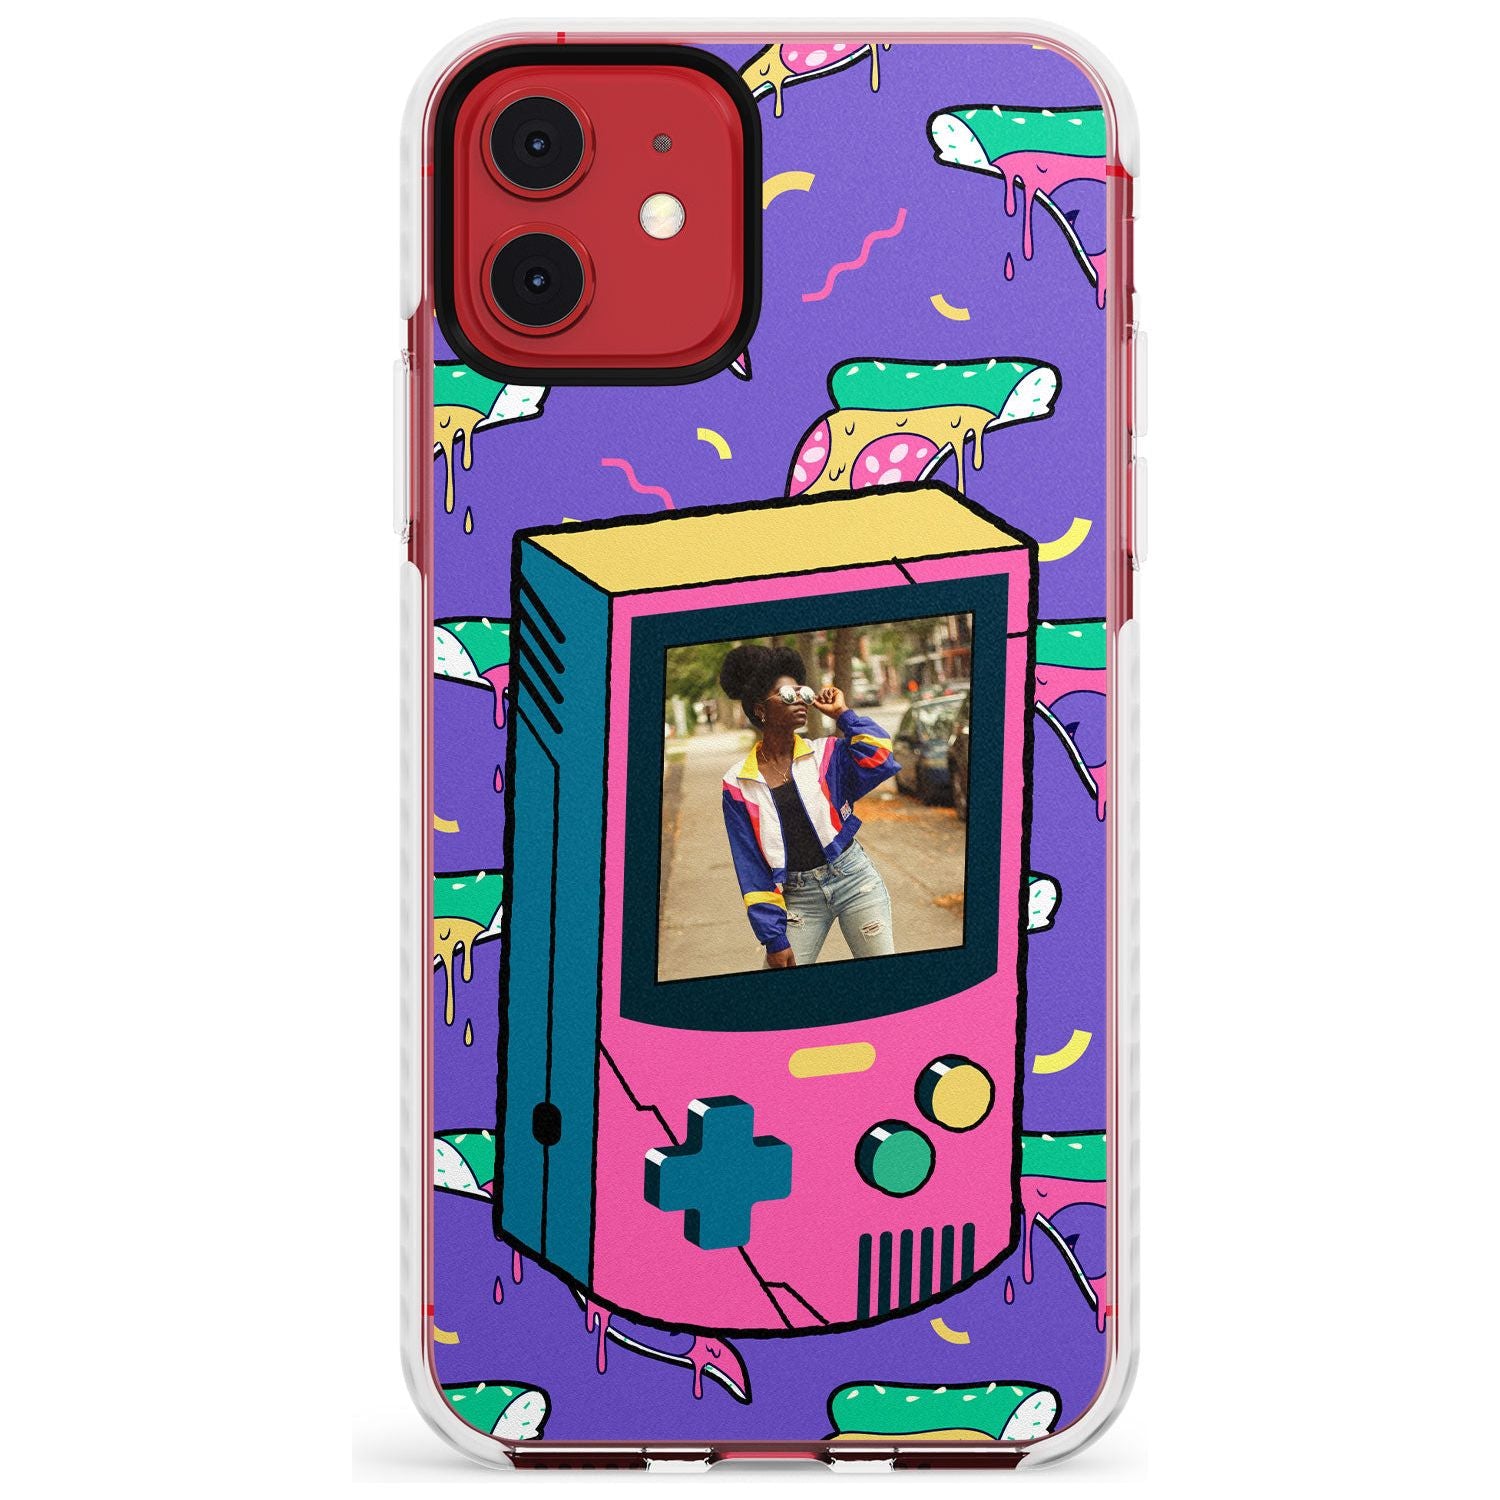 Personalised Retro Game Photo Case Impact Phone Case for iPhone 11